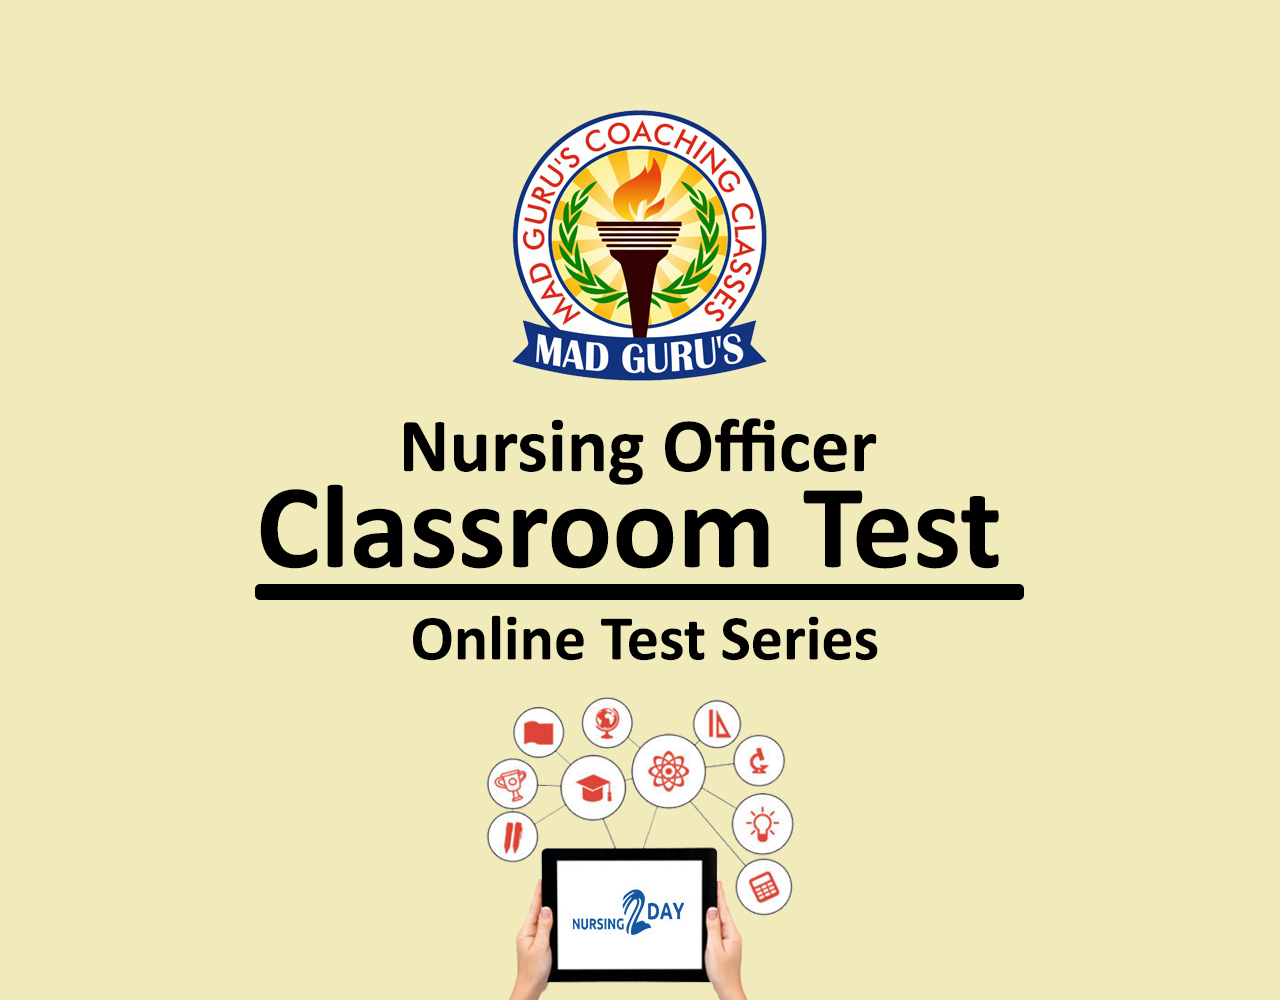 CHO Classroom Test series